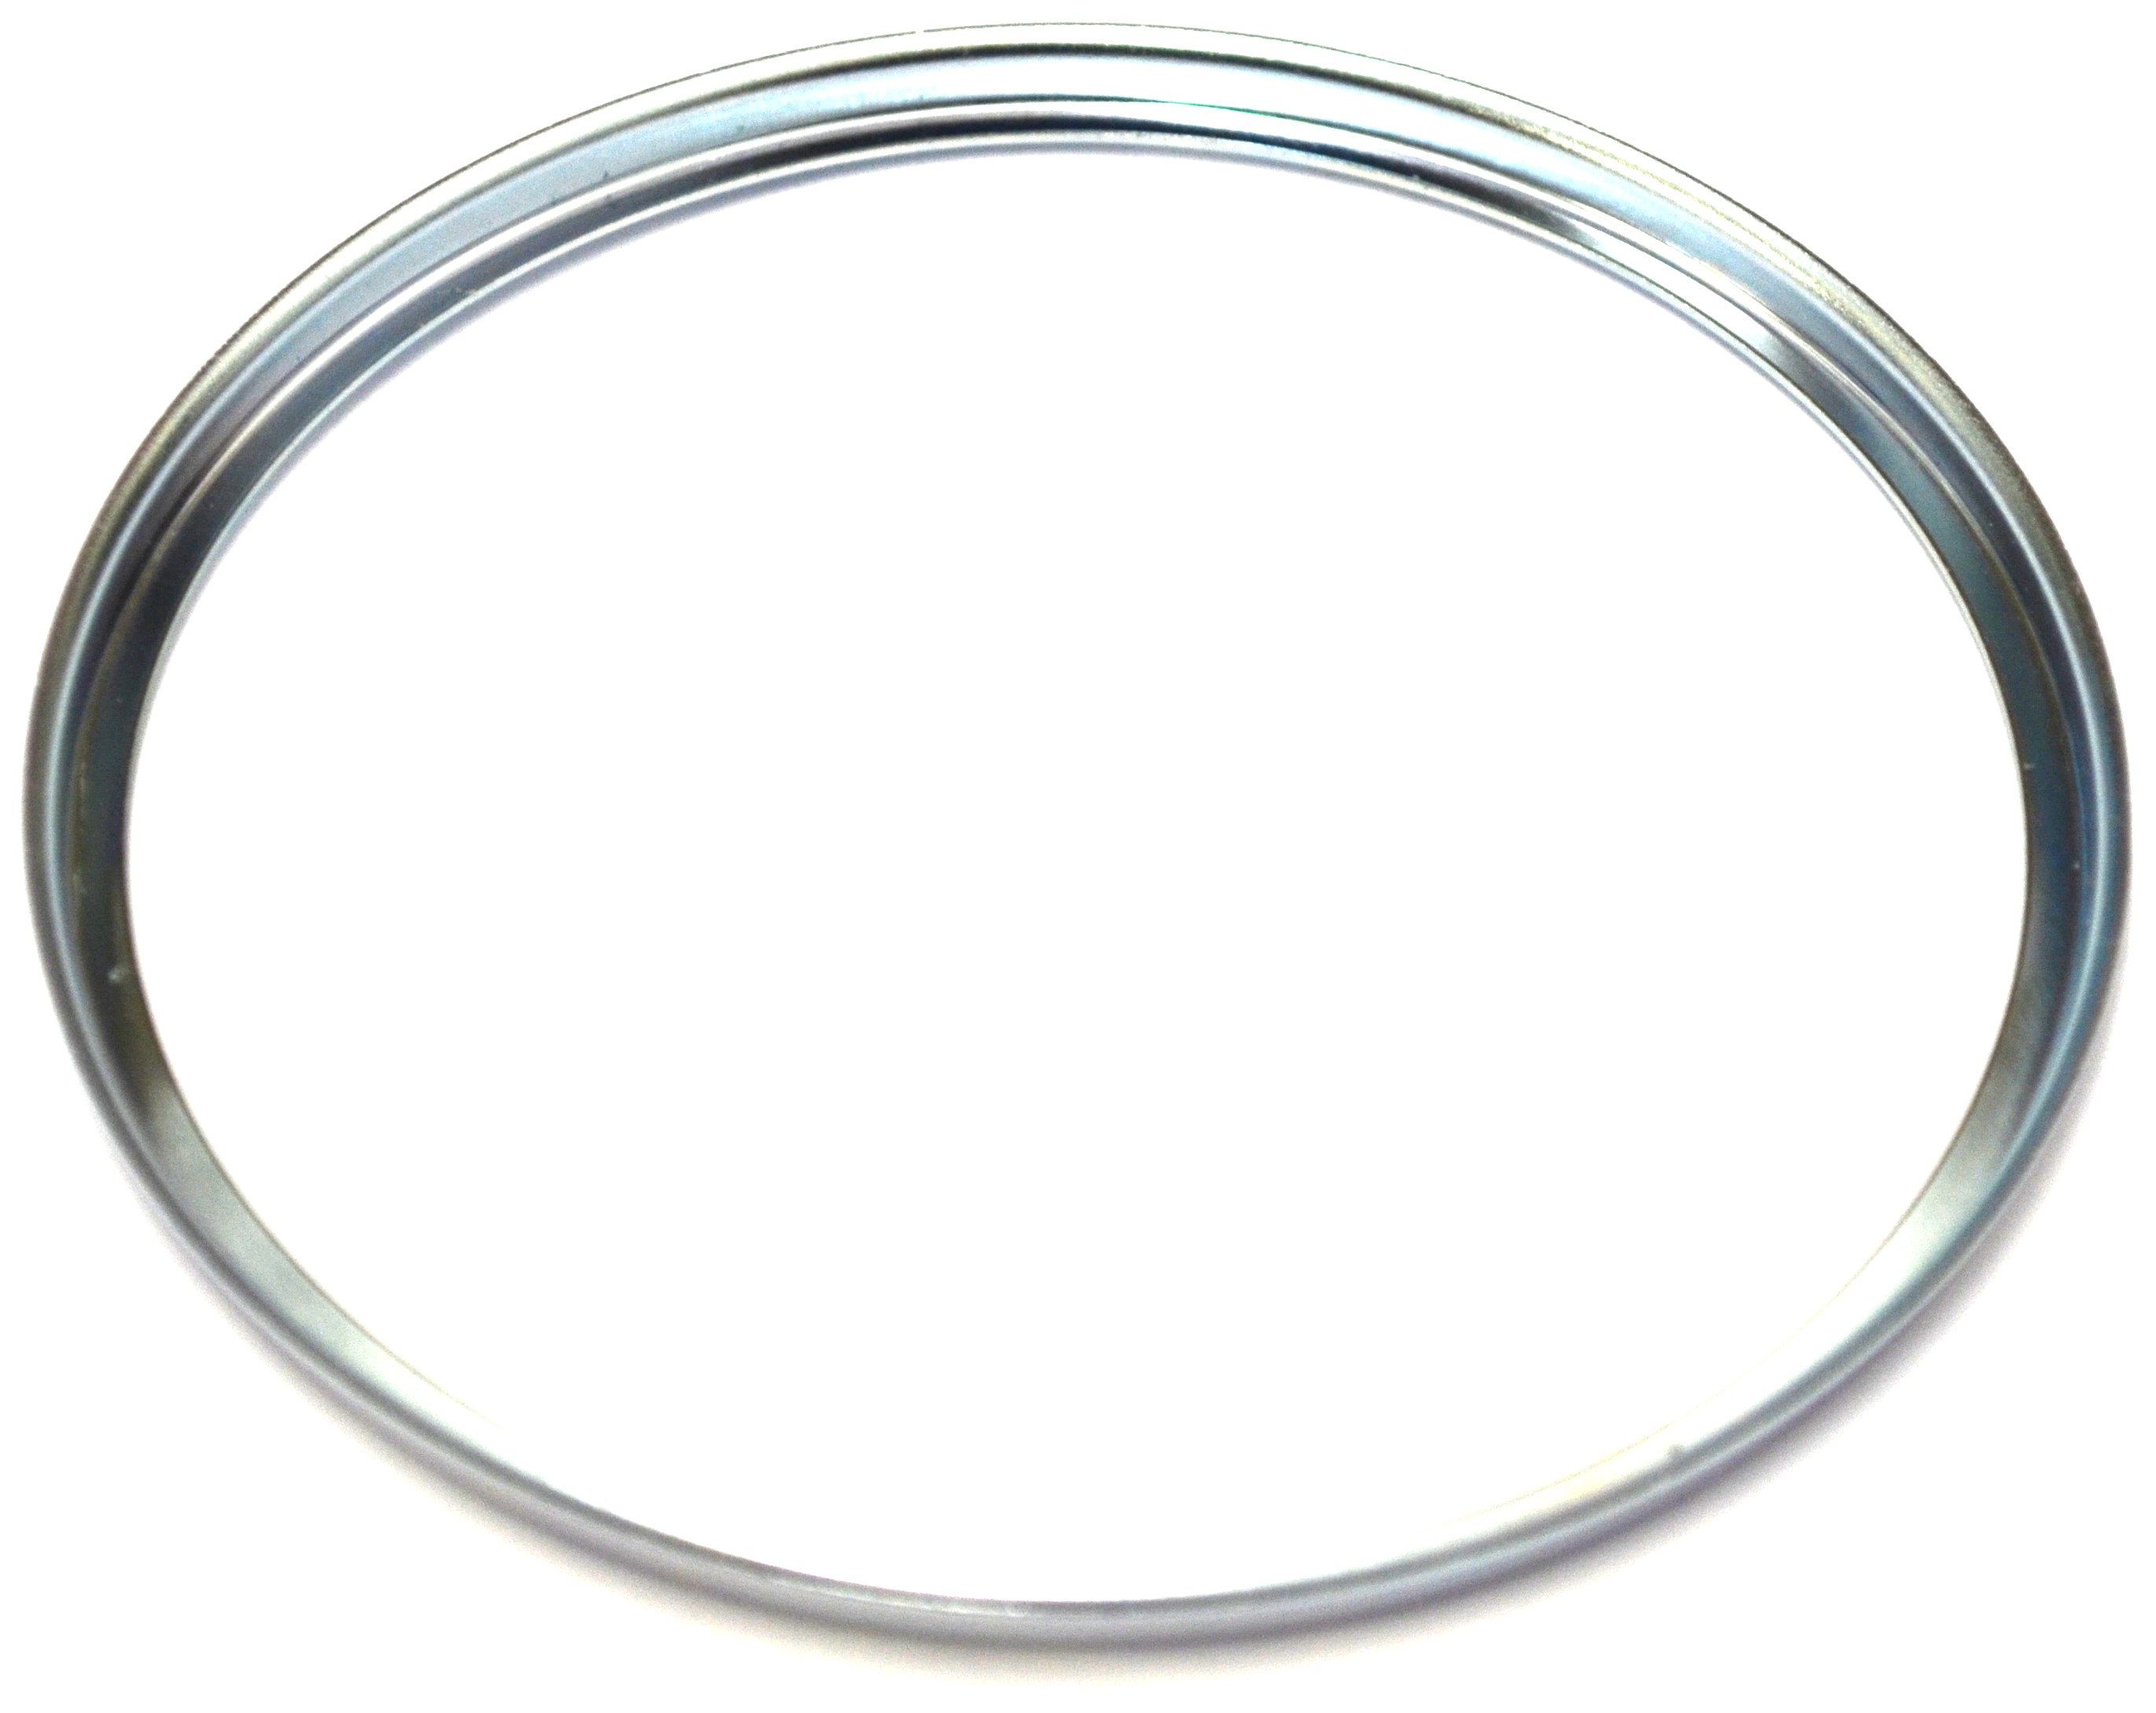 Chronometric Glass support ring